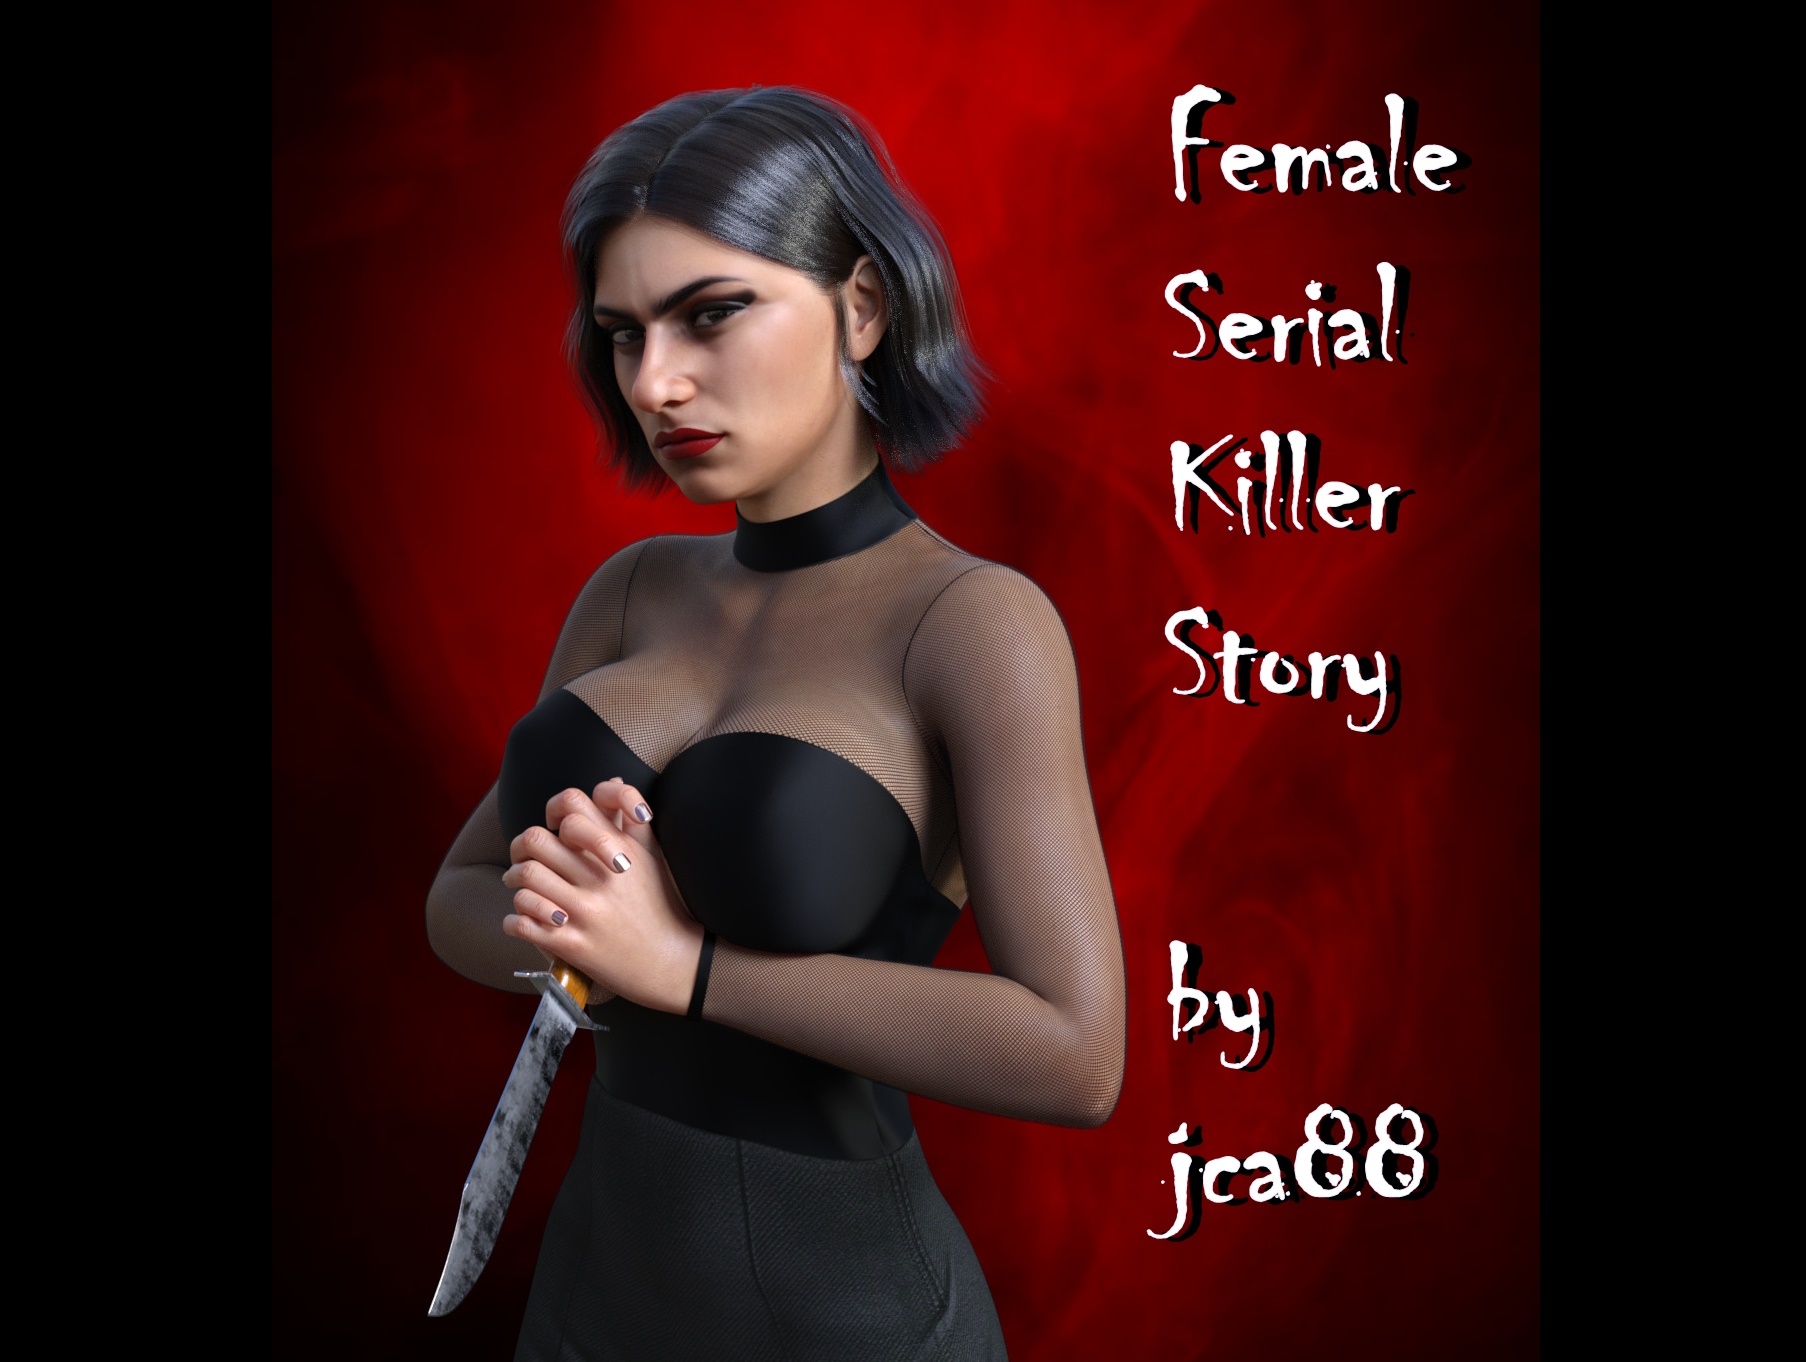 Female Serial Killer Story (coming soon)